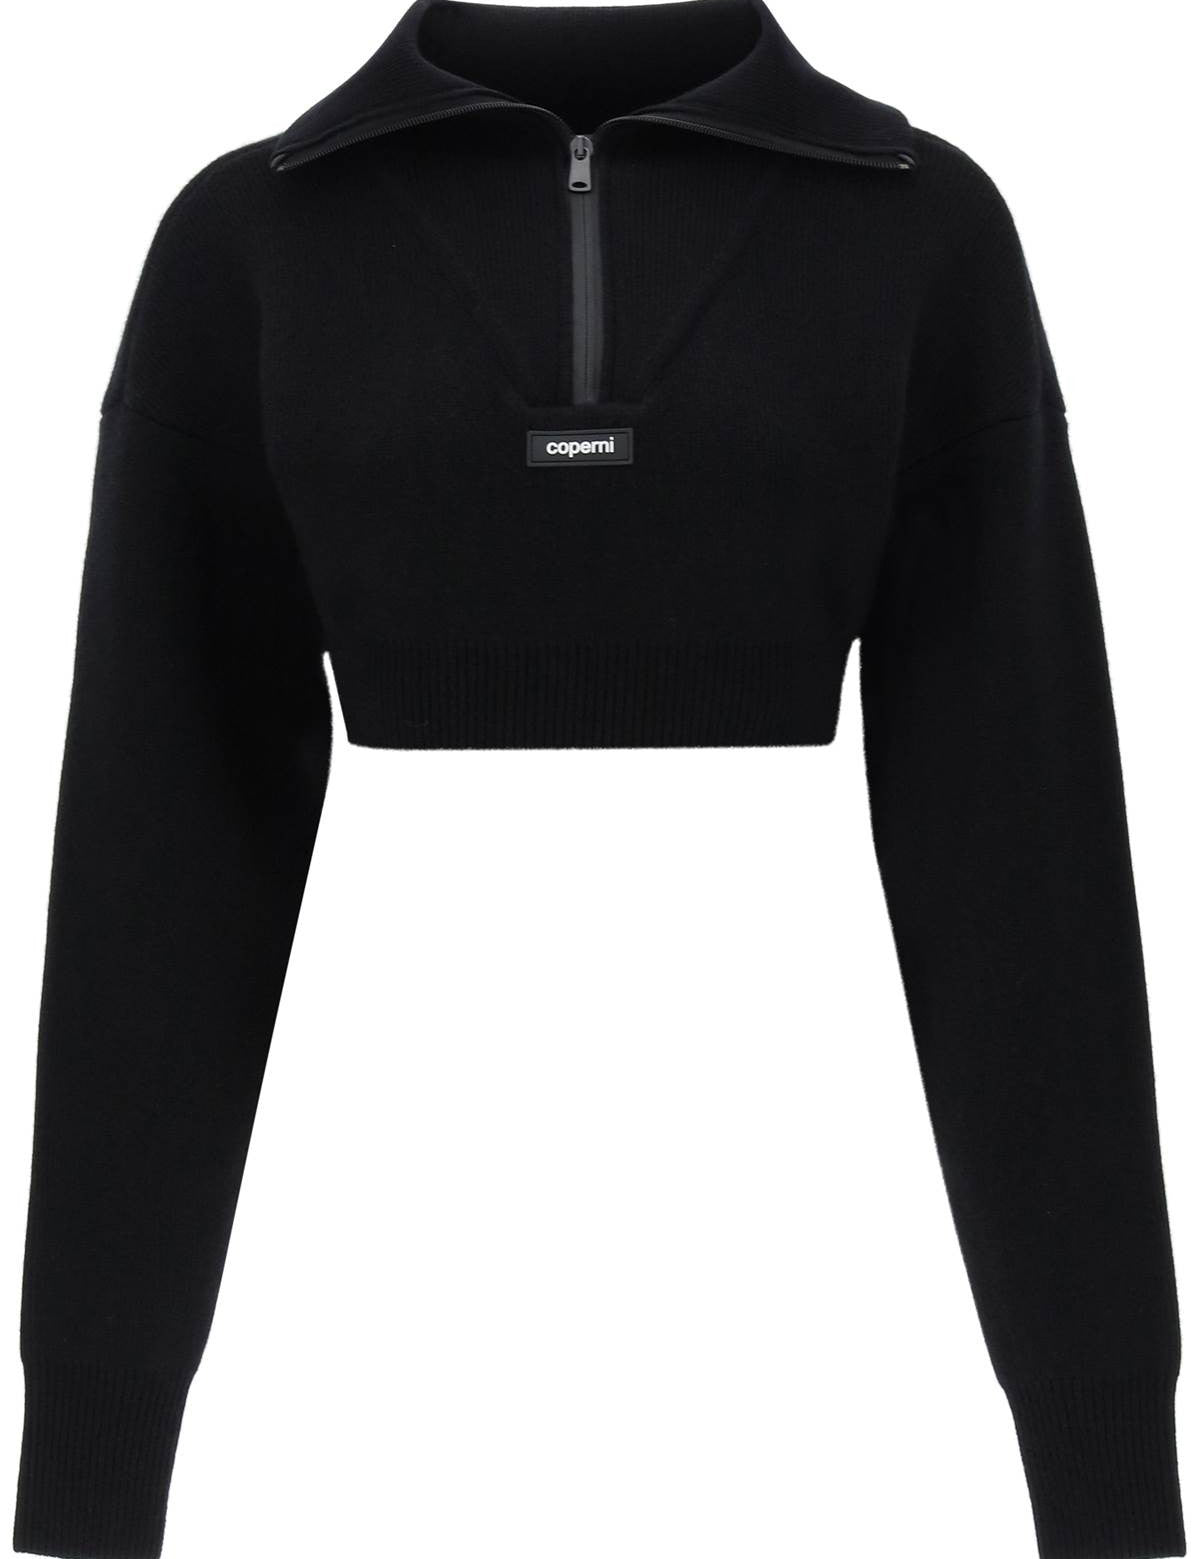 coperni-half-zip-cropped-boxy-wool-sweater.jpg